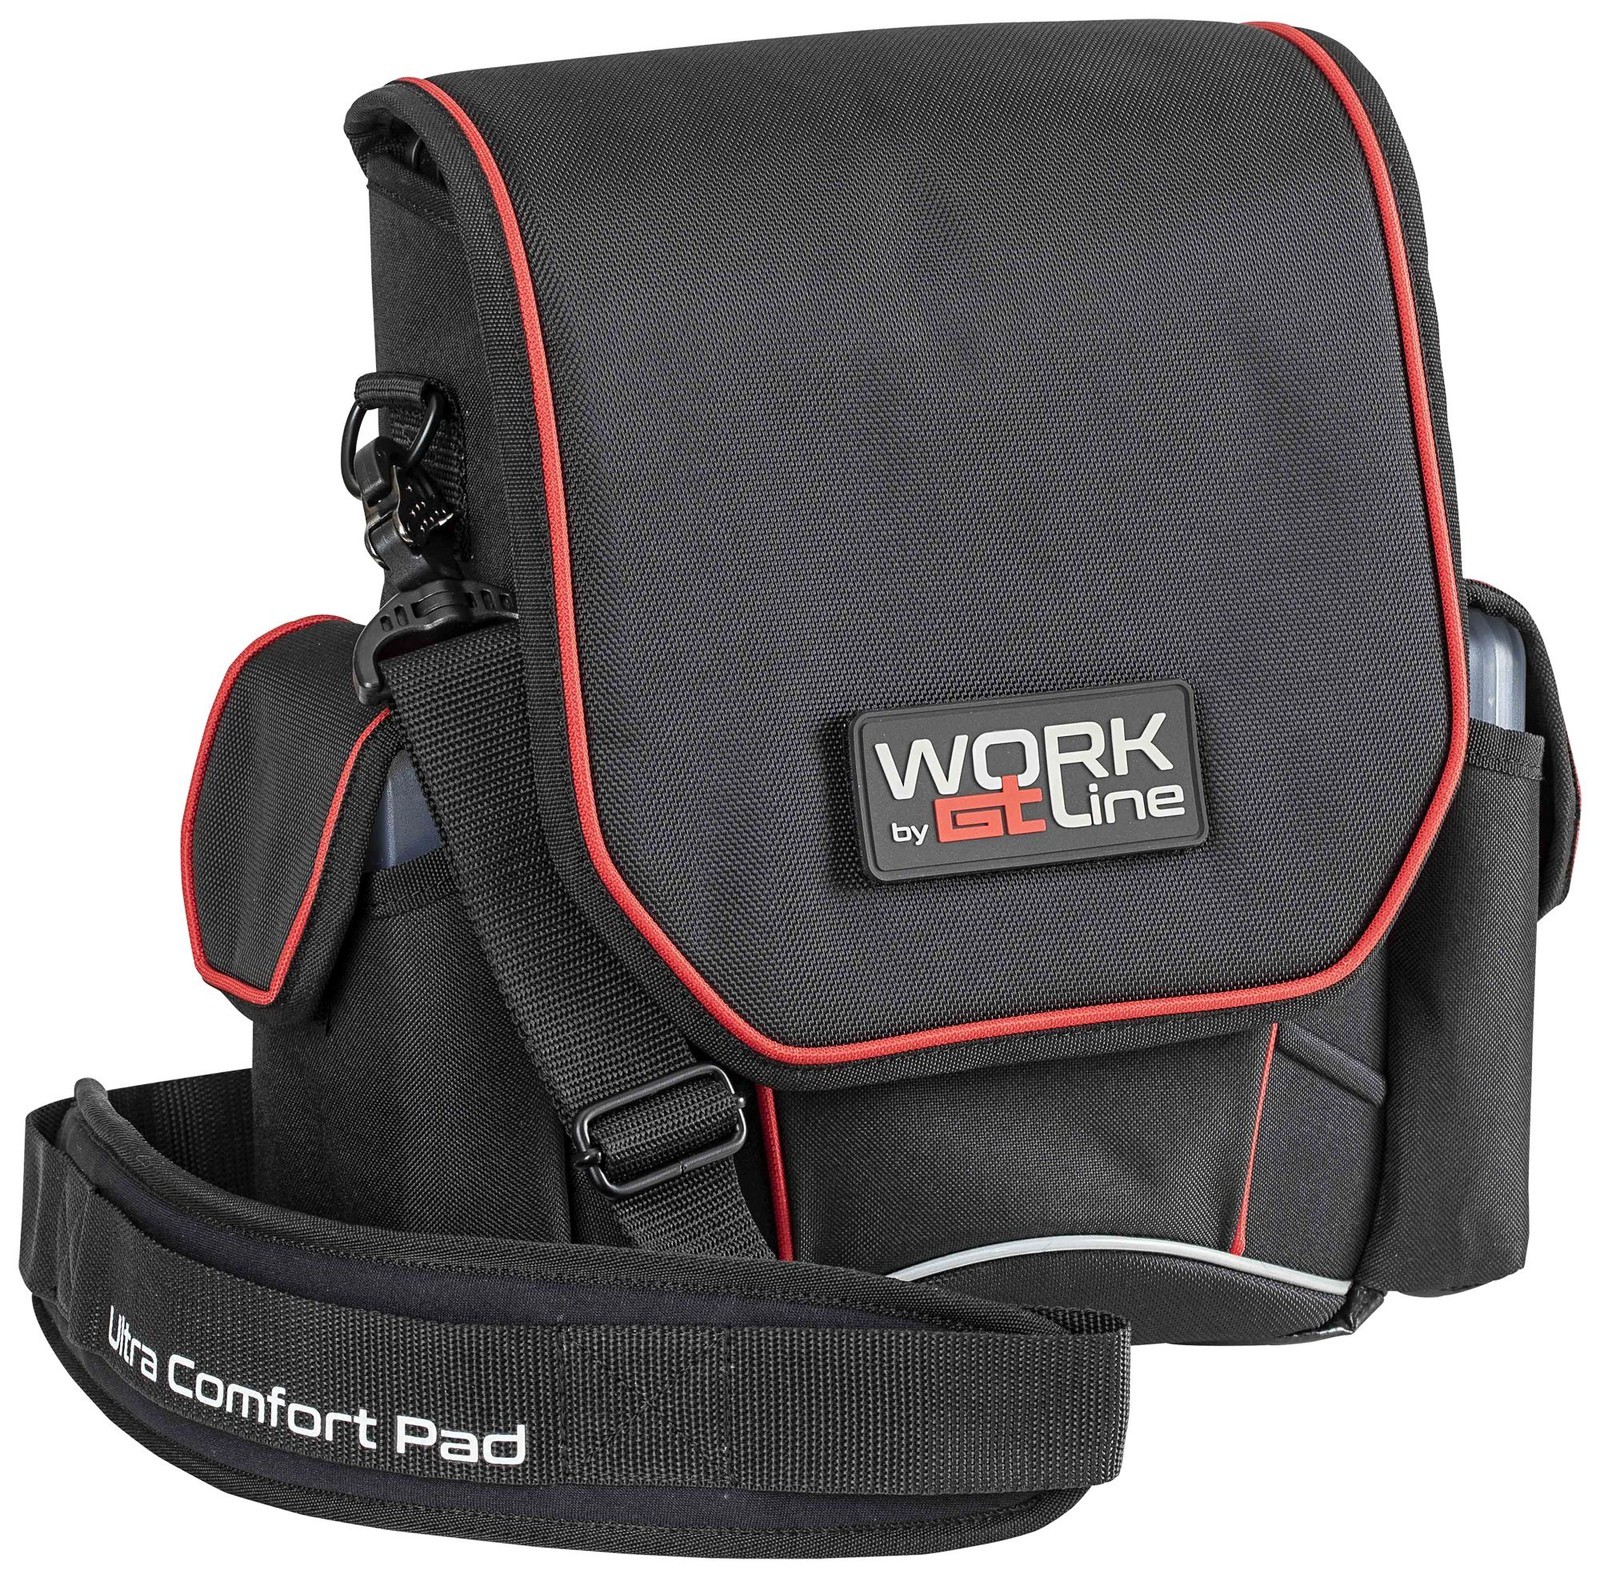 GtGt LinePss Compact Bag R Shoulder Tool Bag, 110 X 230 X 320mm